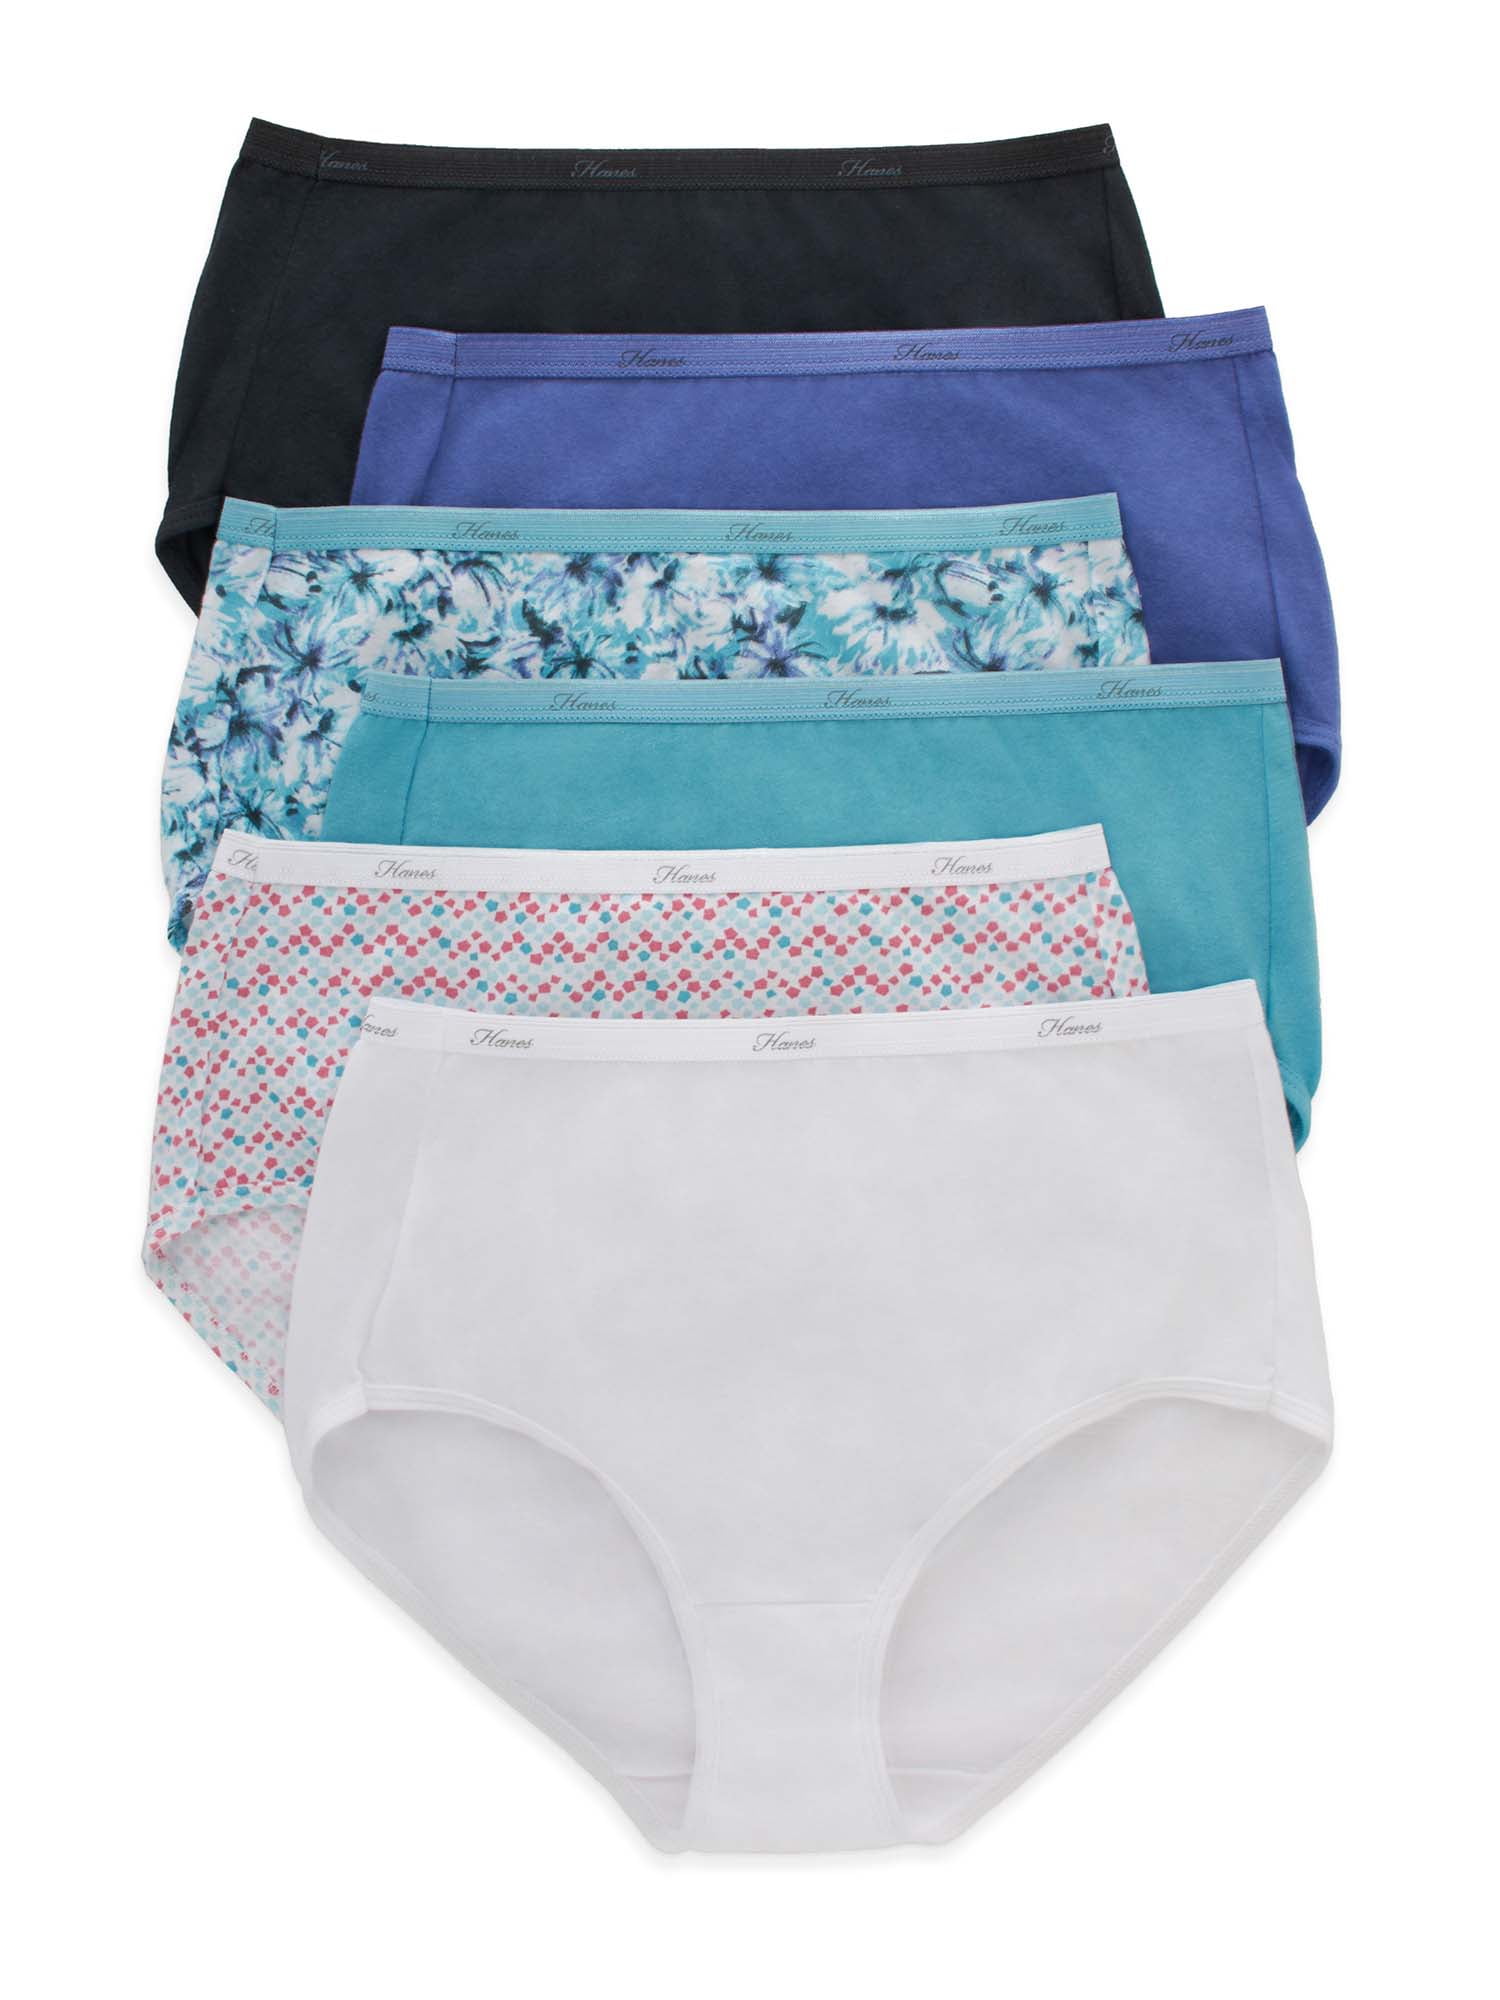 Hanes Cool Comfort Cotton Brief Underwear for Women UK